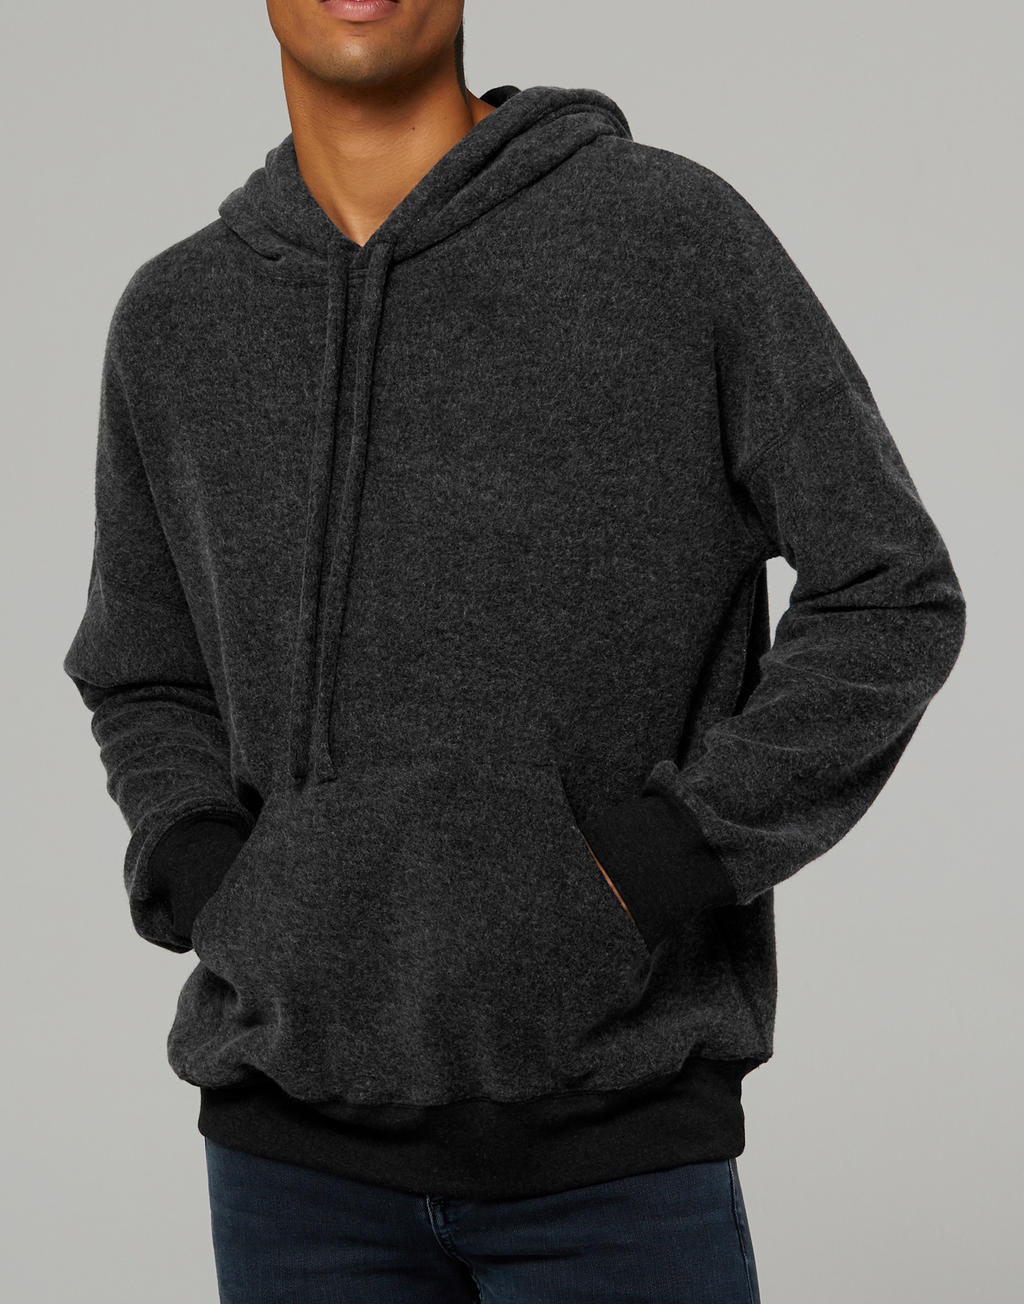  Unisex Sueded Fleece Pullover Hoodie in Farbe Black Heather